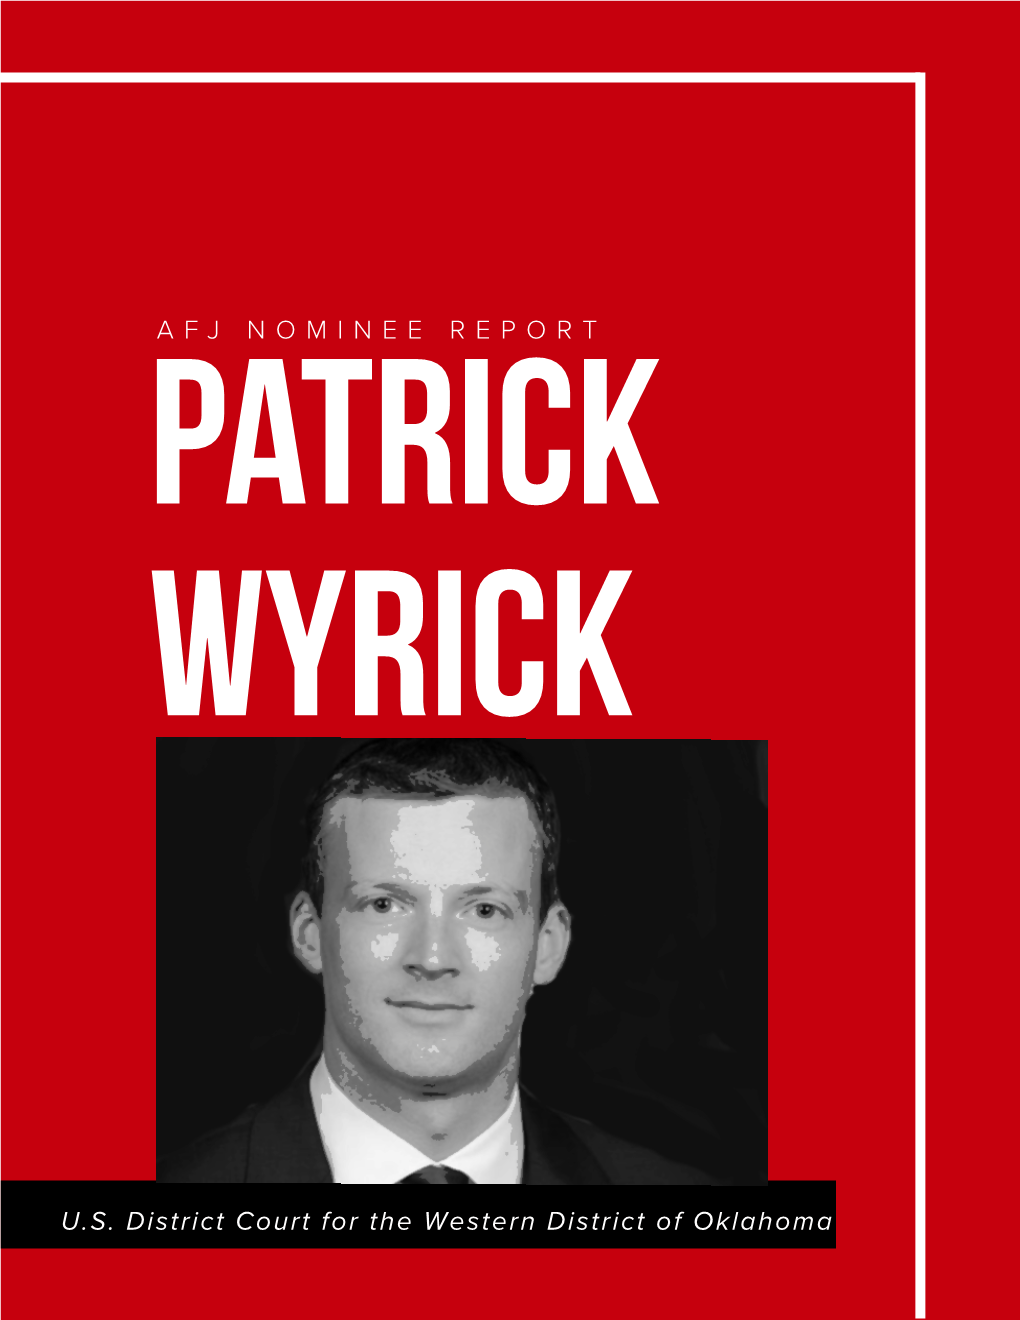 Patrick Wyrick